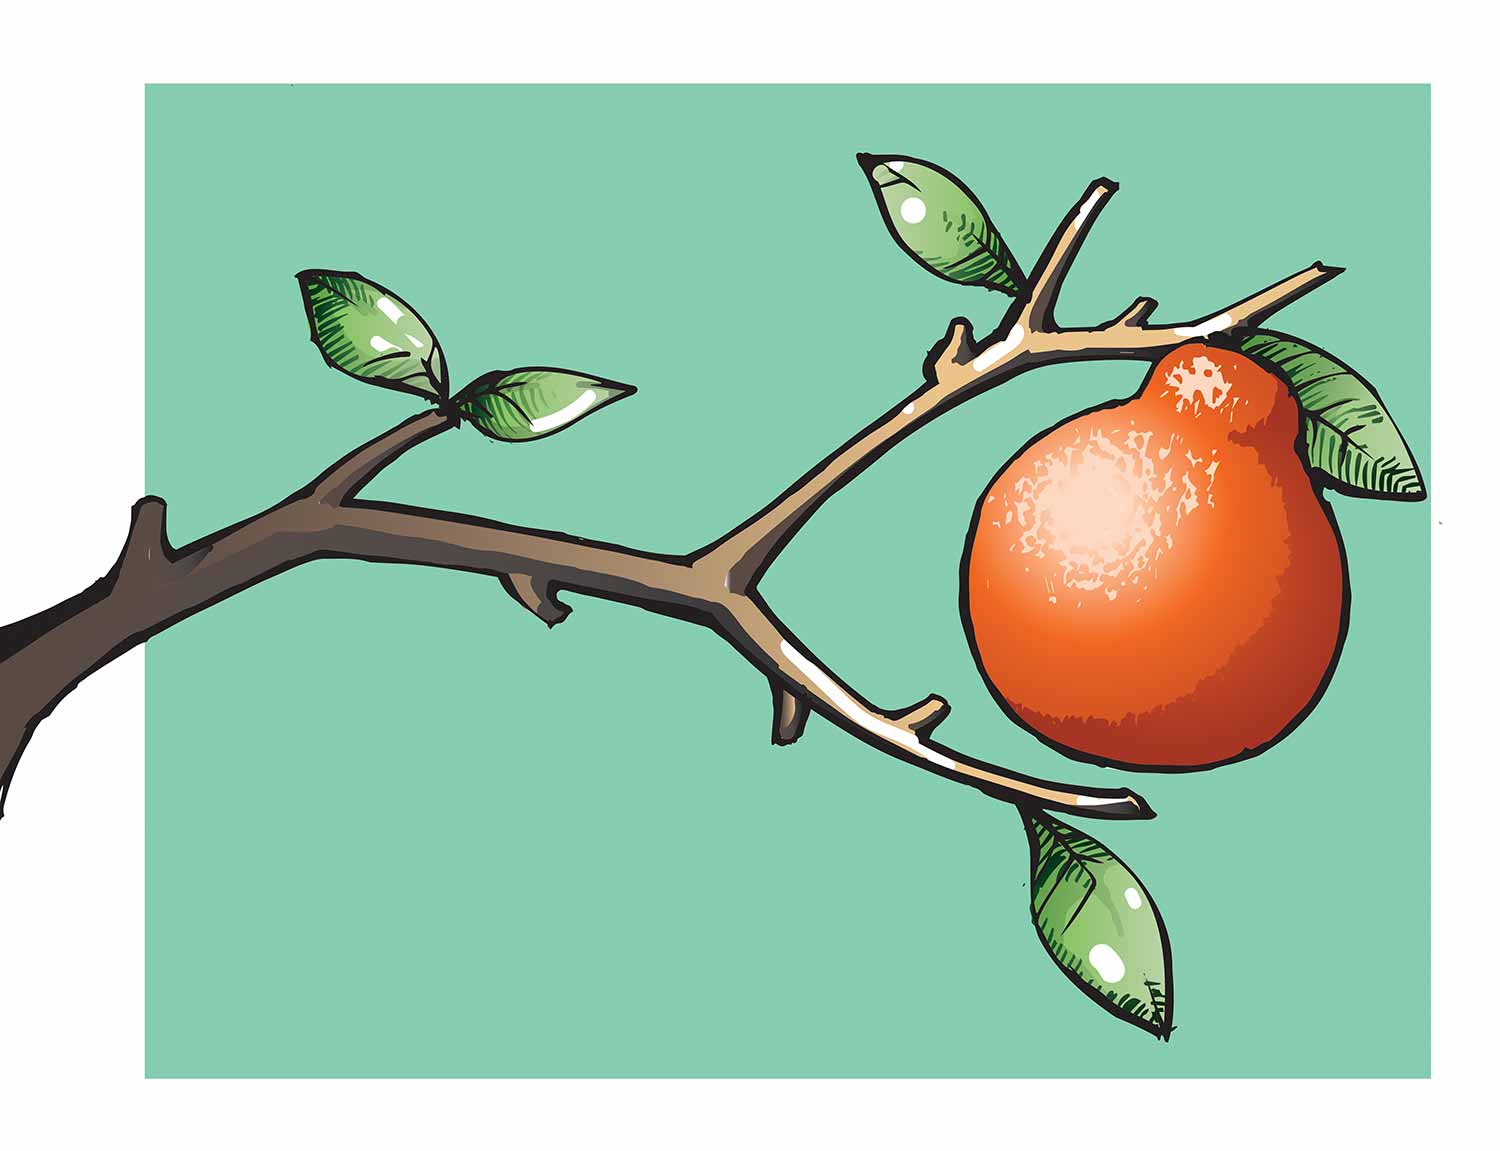 Illustration of an orange tree branch